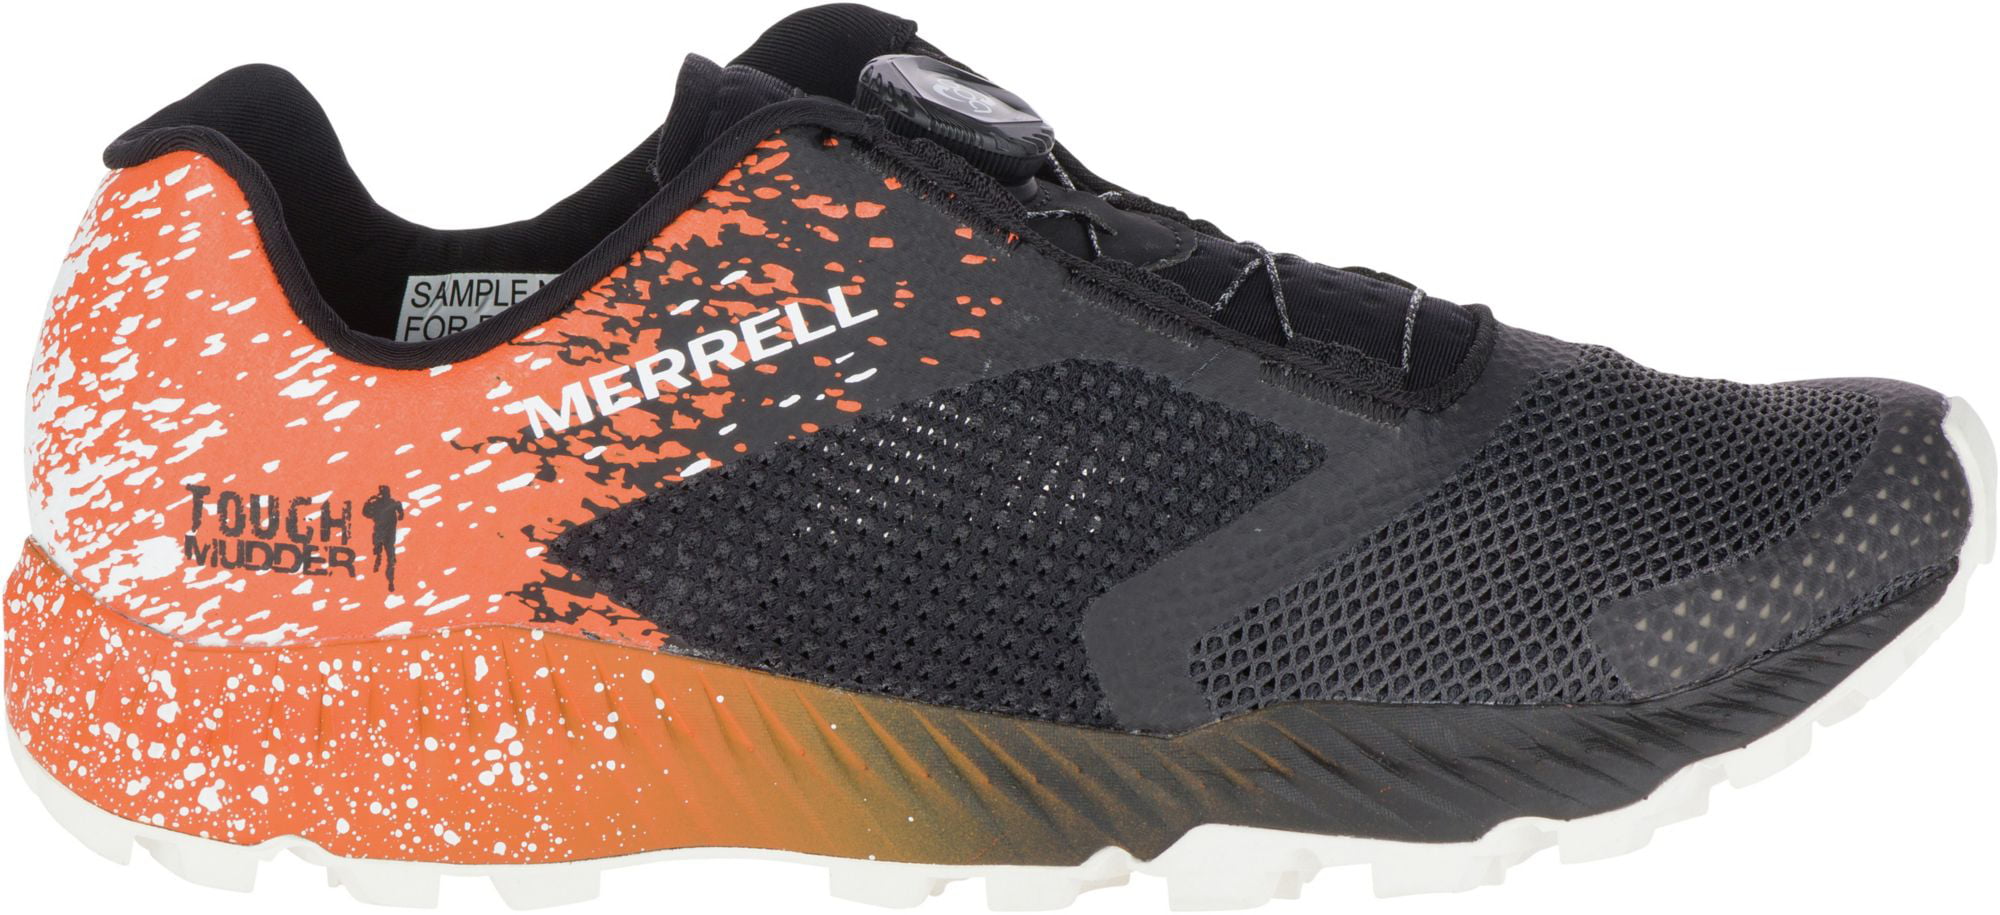 Merrell All Out Crush Tough Mudder 2 Running Shoes Black Orange 